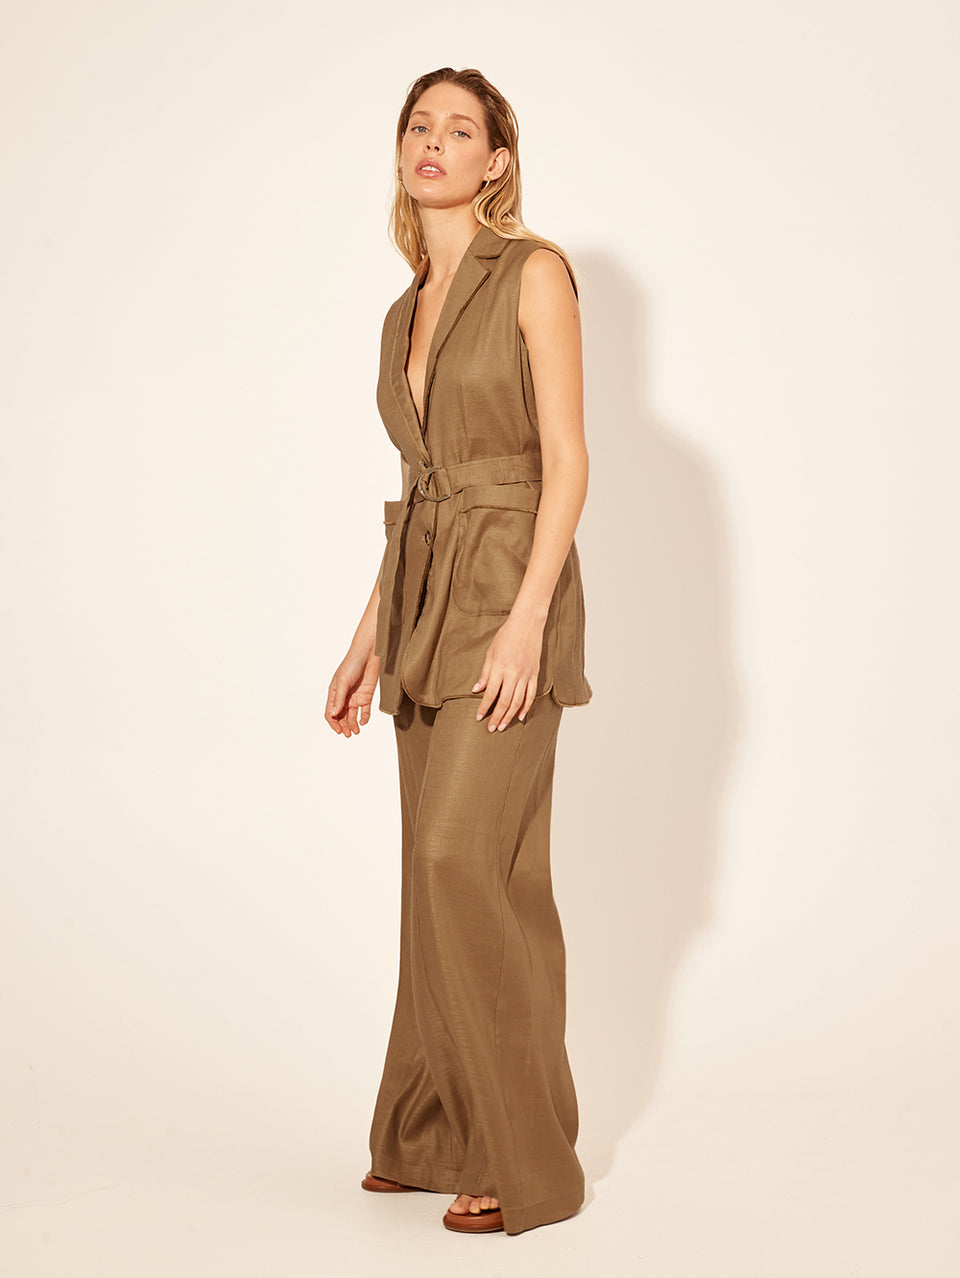 Penelope Vest KIVARI | Model wears brown tailored vest side view